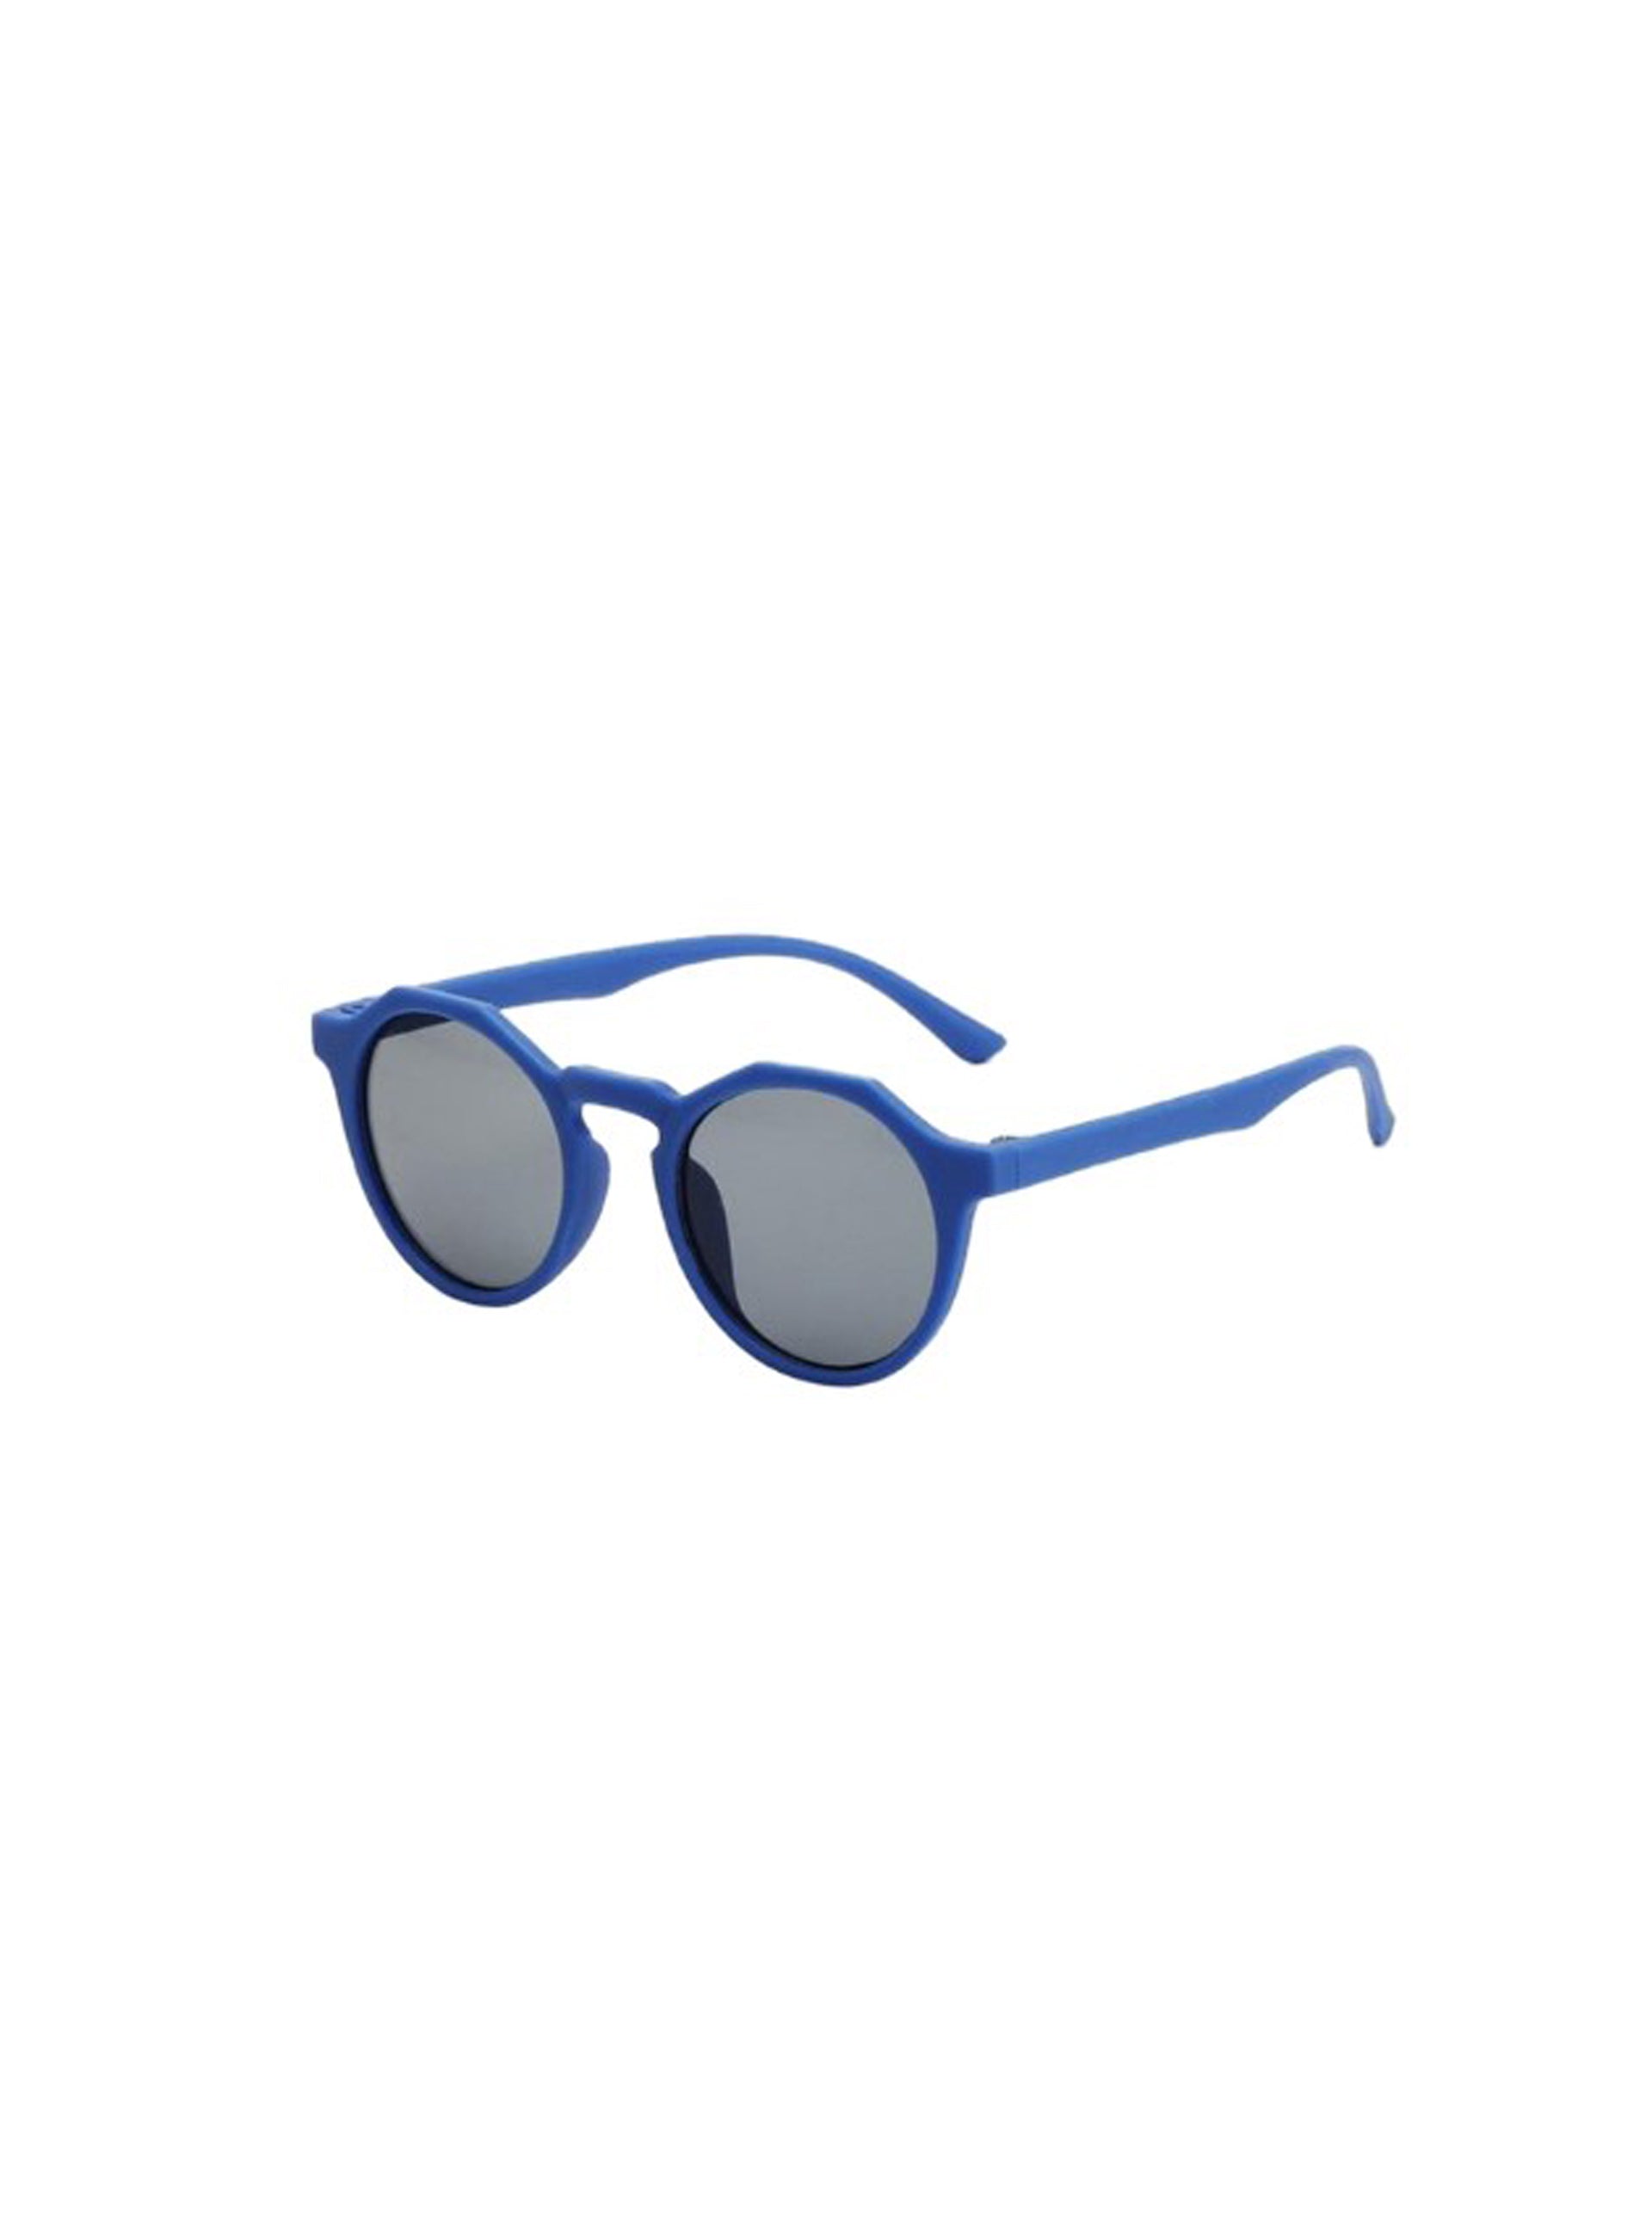 chiselled egyptian blue sunglasses